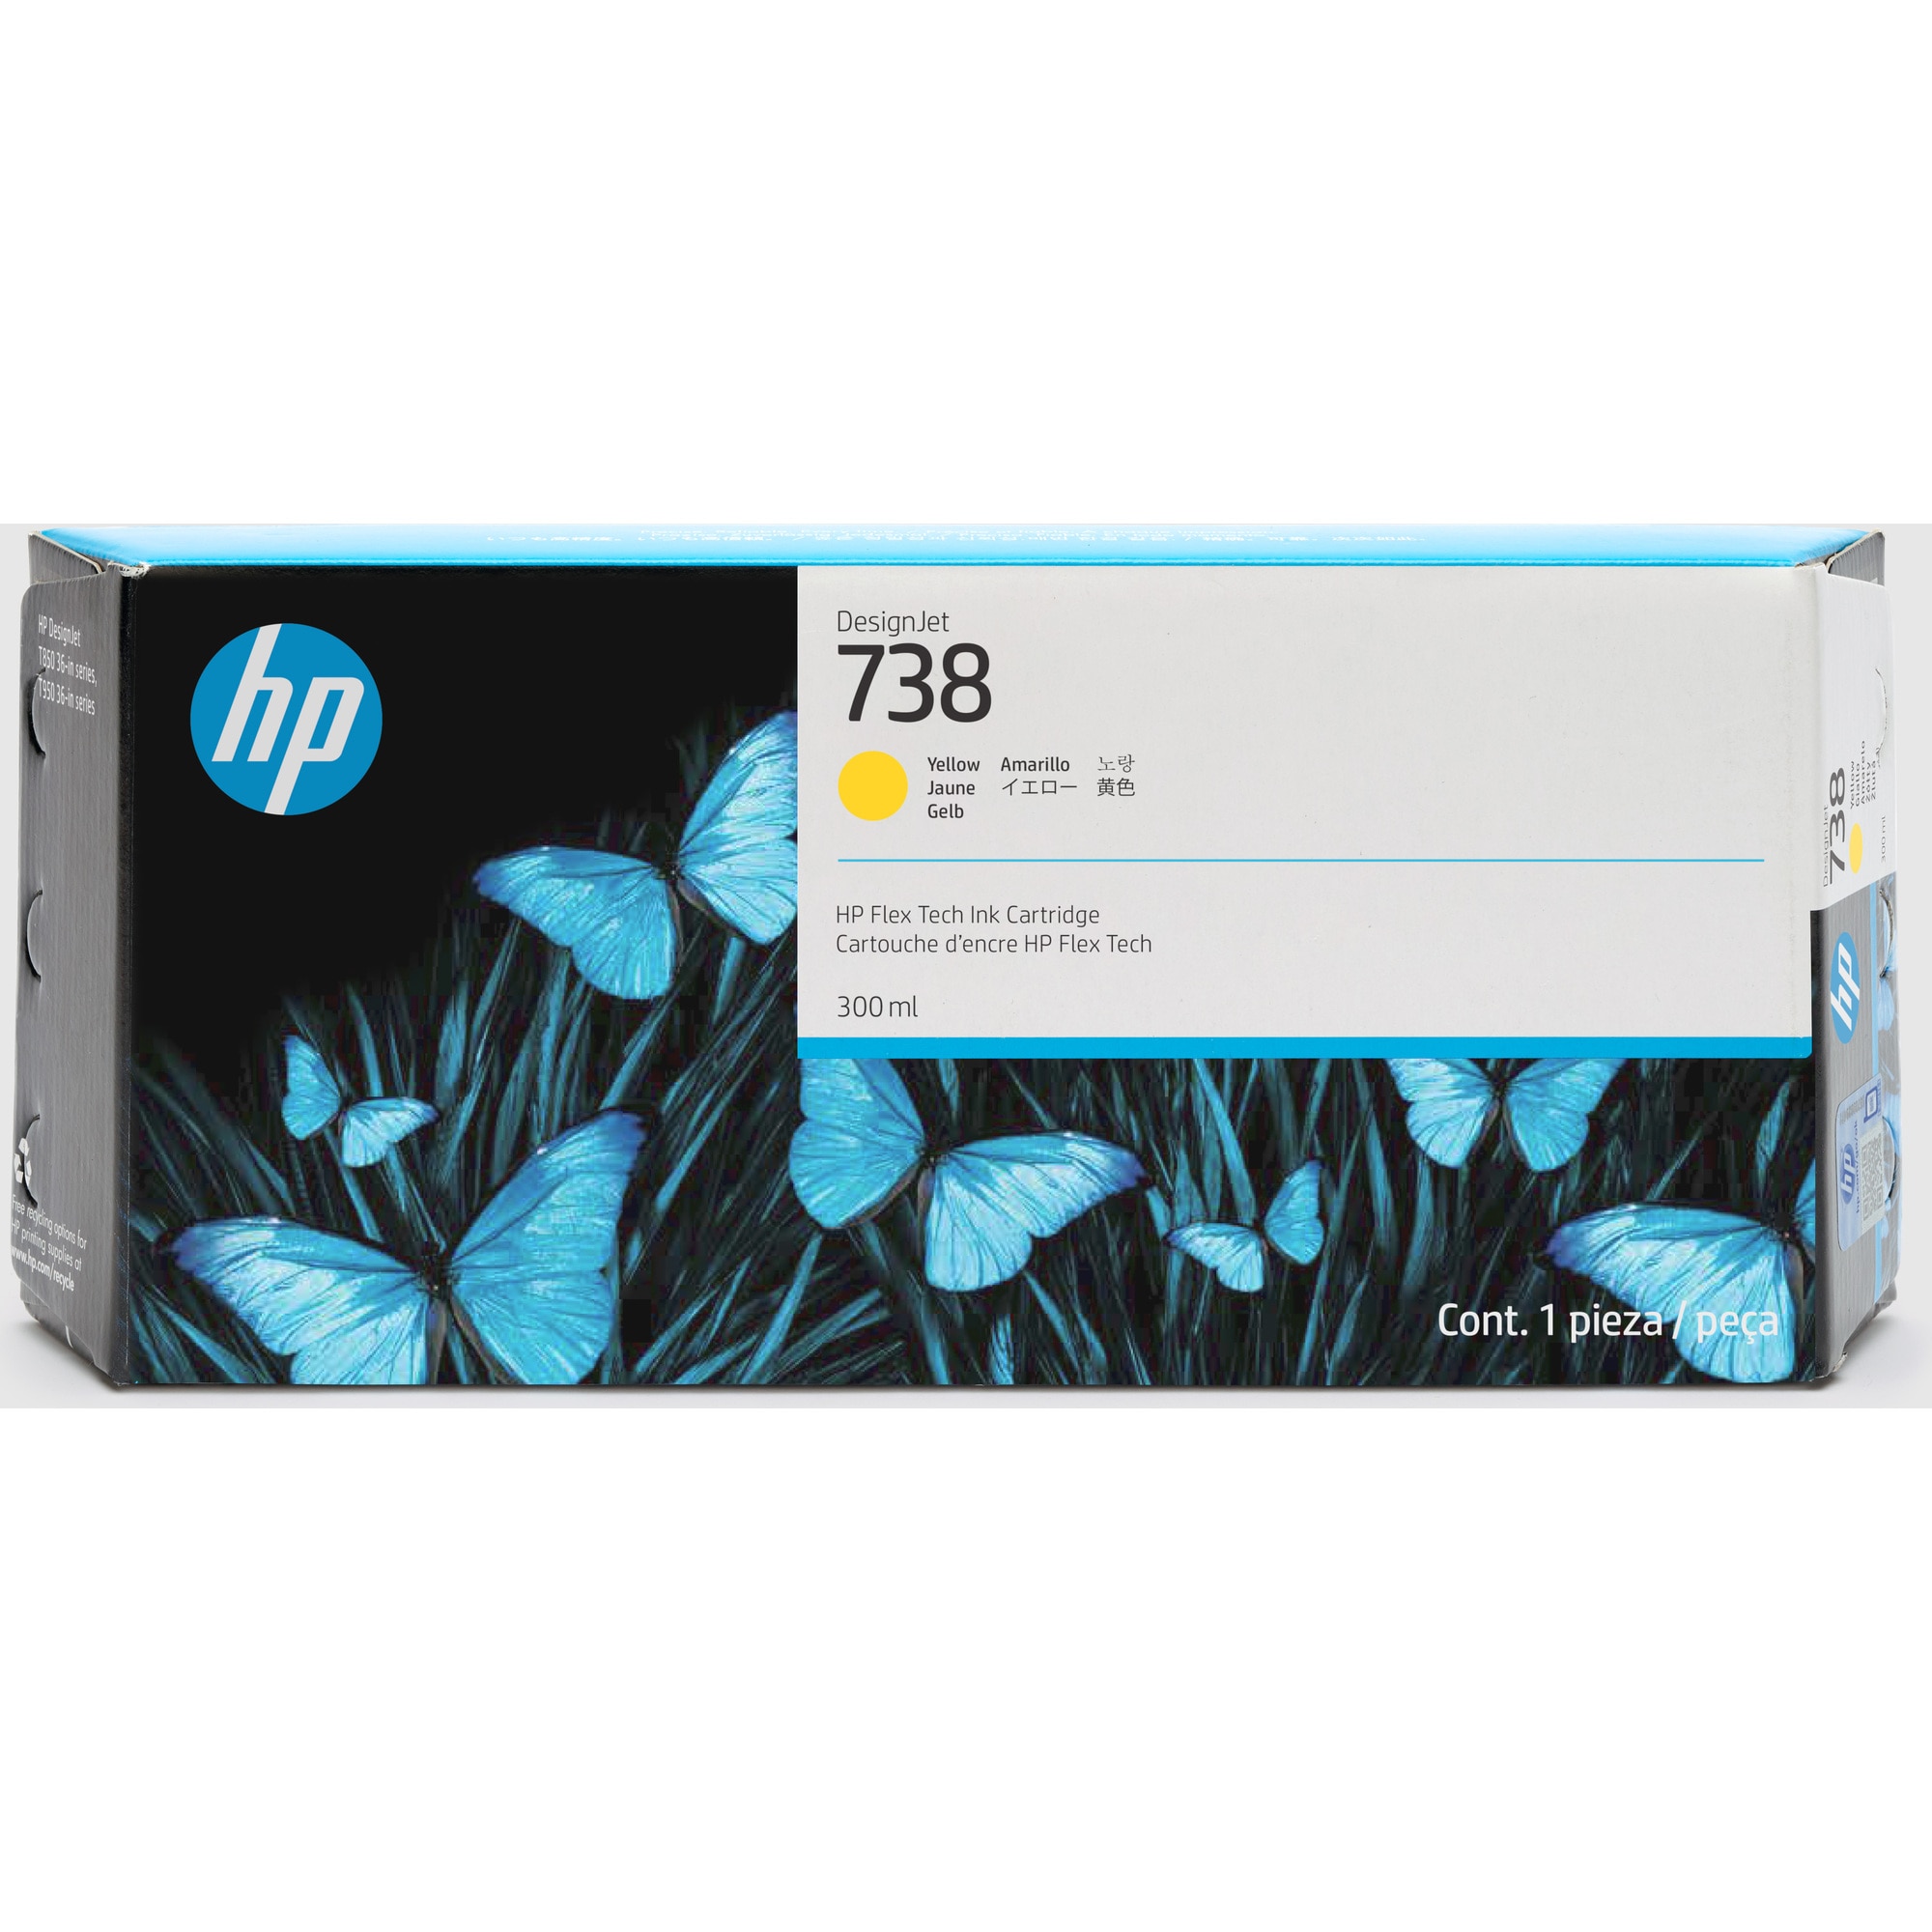 HP 738 300-ml Black DesignJet Ink Cartridge5 